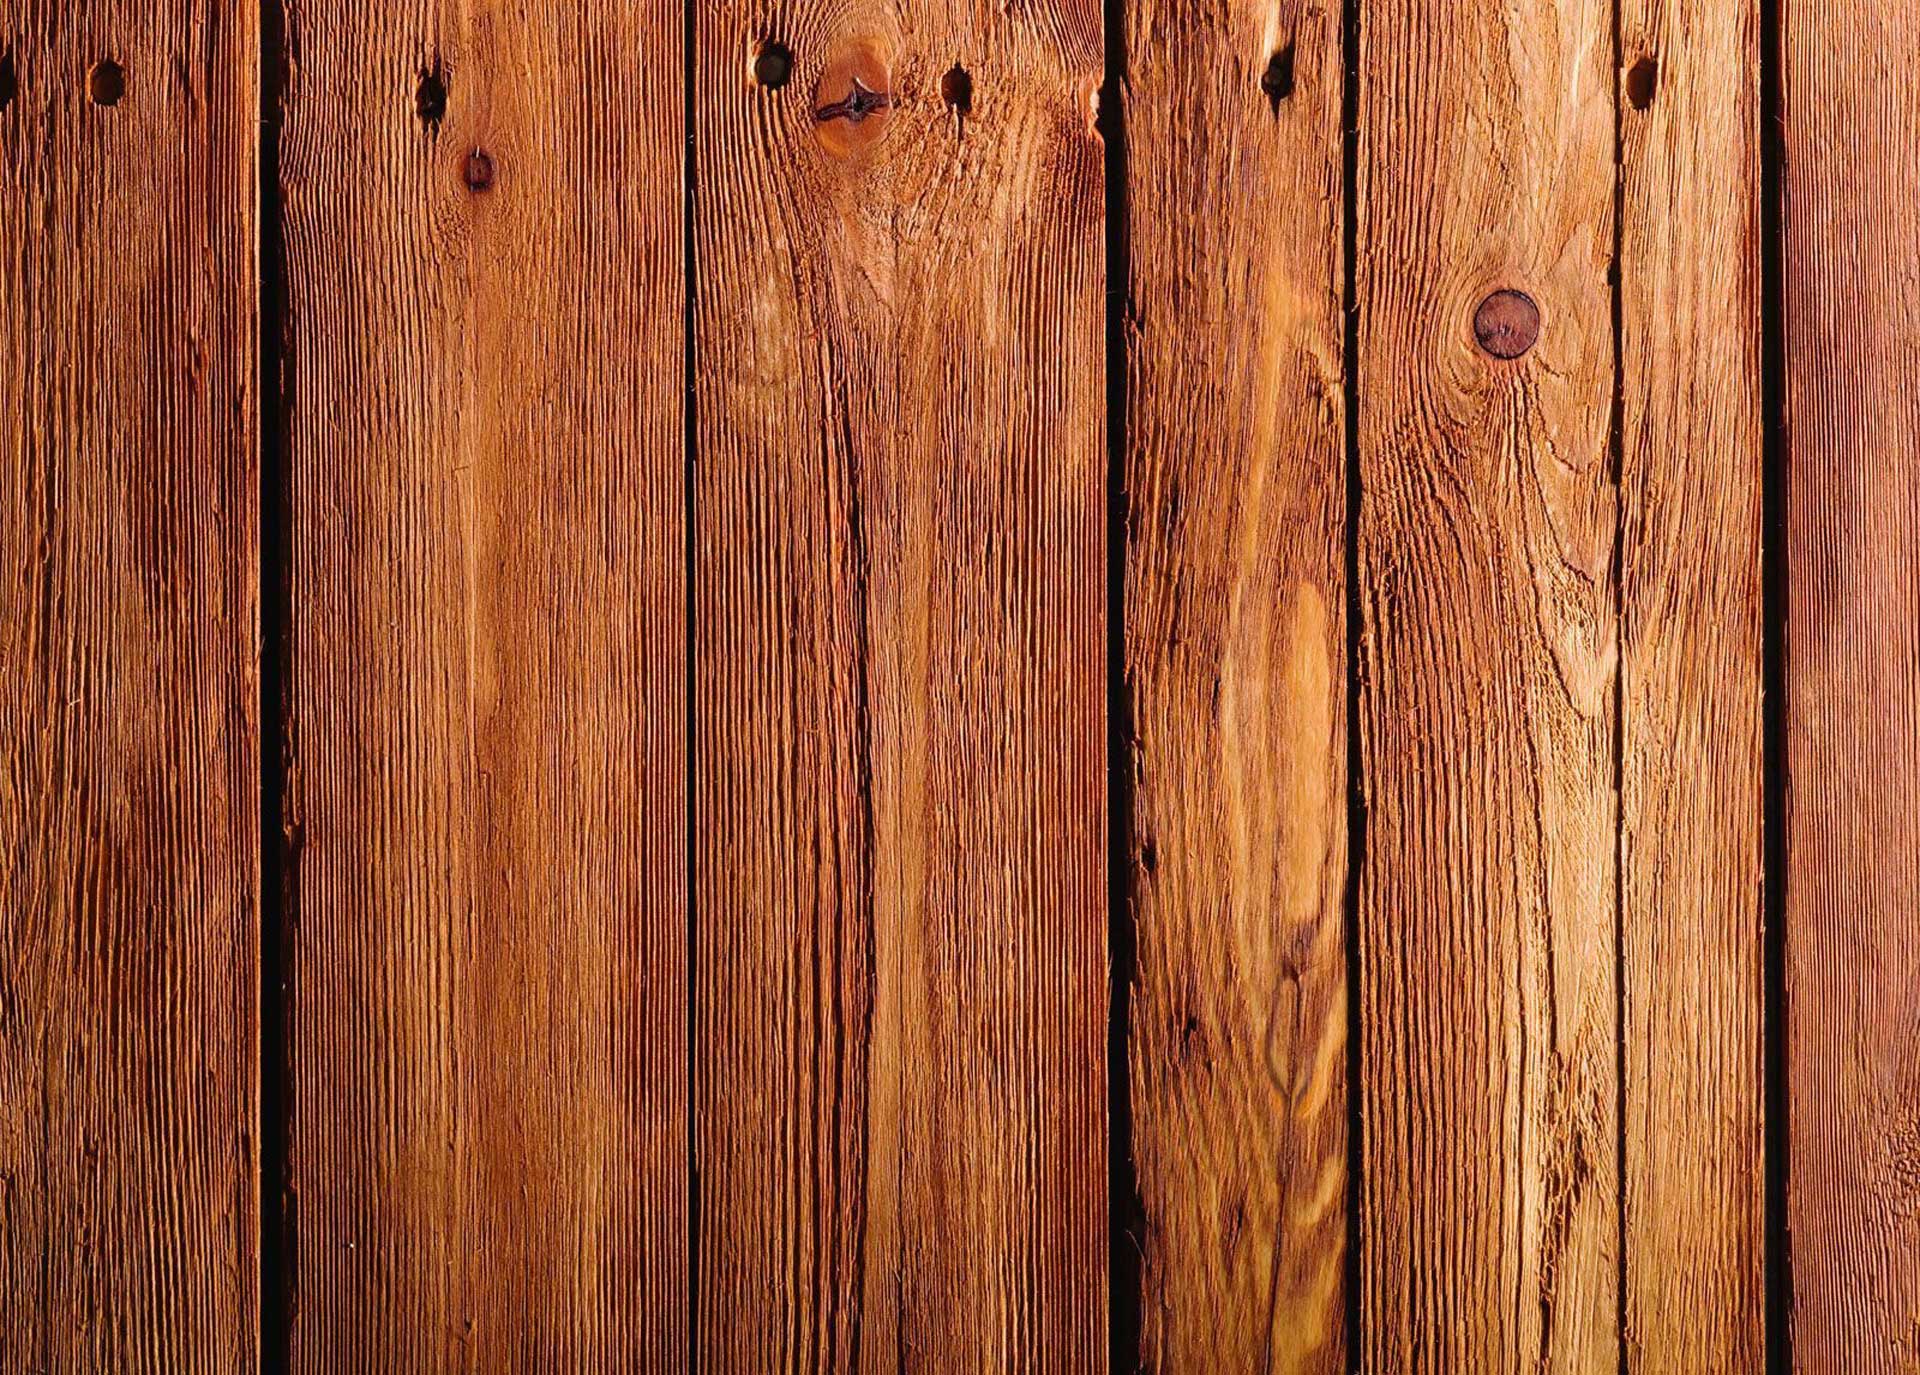 Wood. Деревянная стенка. Деревянный фон. Текстура дерева. Деревянная стена.